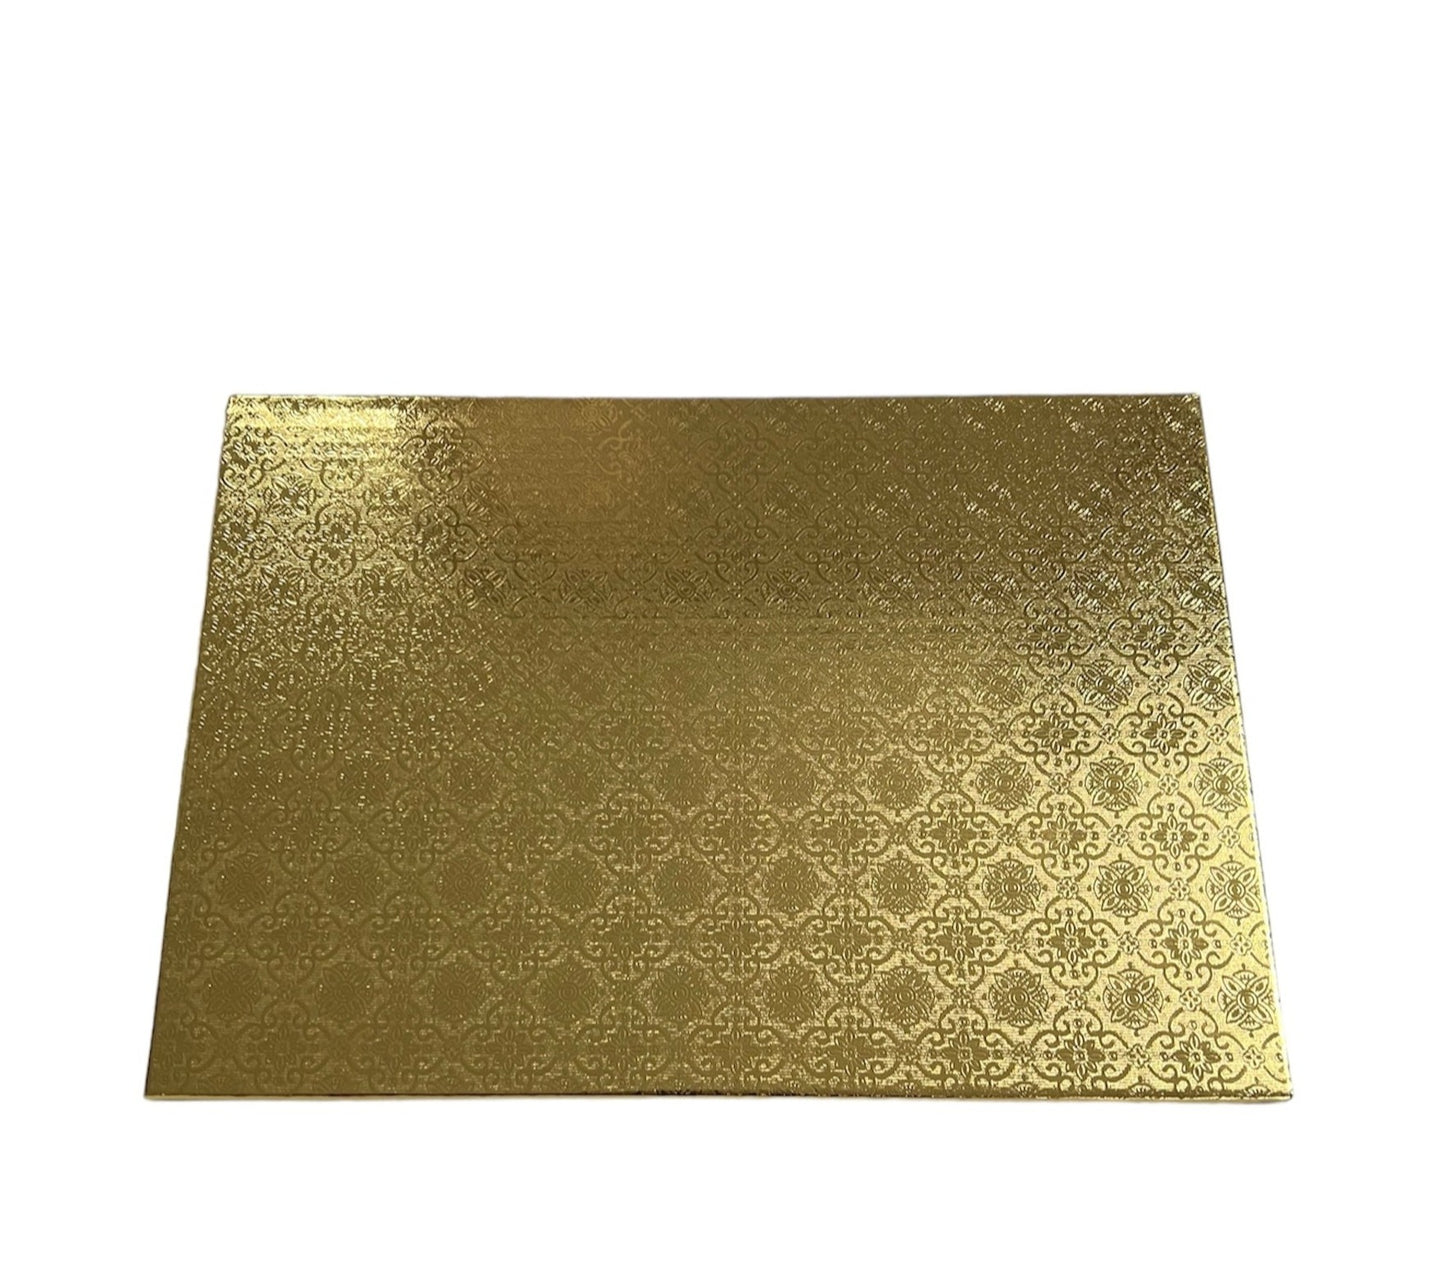 1/4 Sheet Gold Wrap Around Cake Board